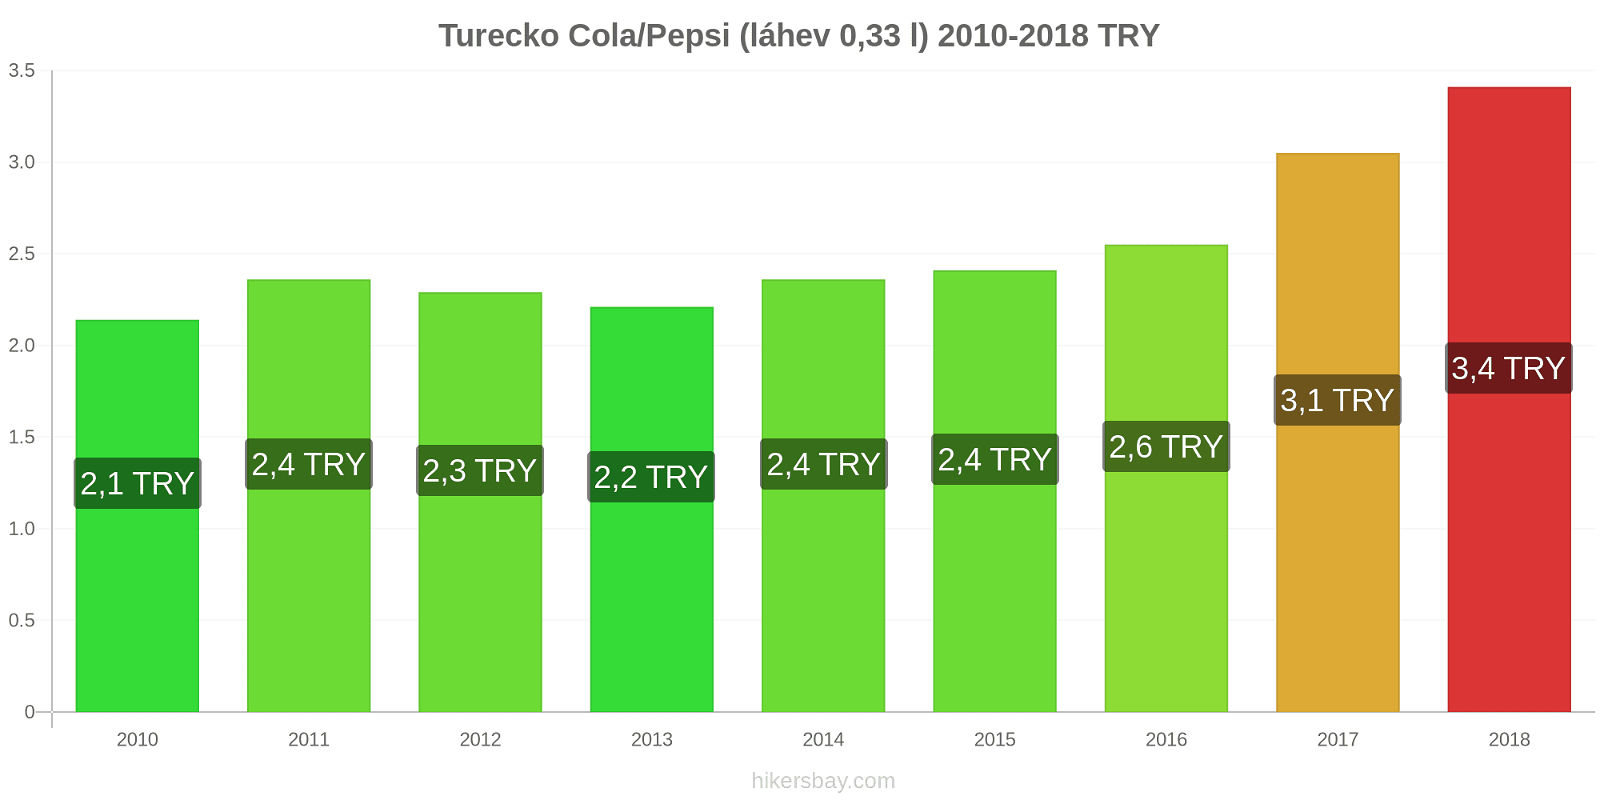 Turecko změny cen Coca-Cola/Pepsi (láhev 0.33 l) hikersbay.com